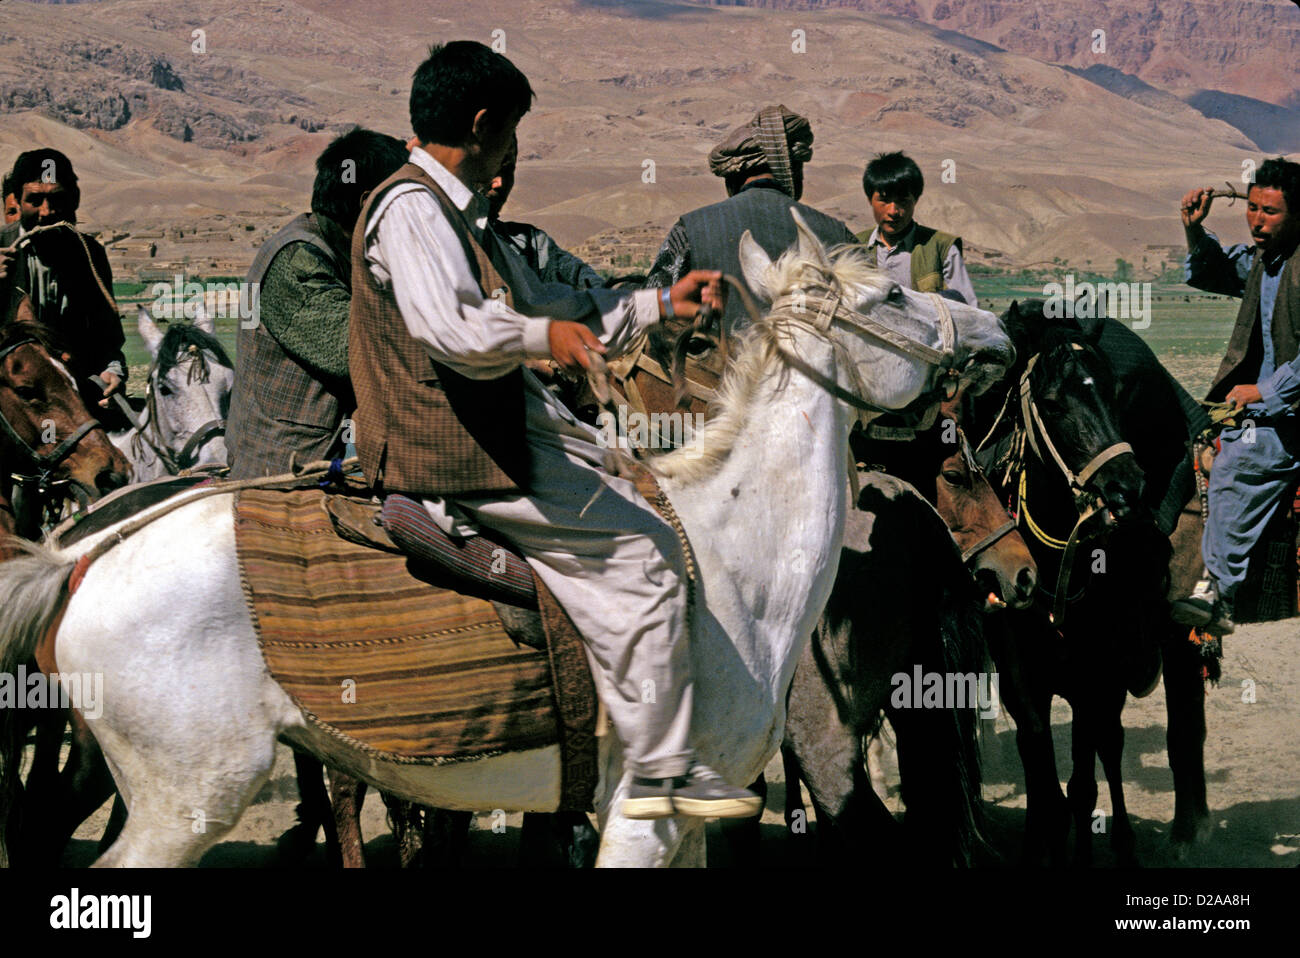 Afghanistan, Bamyan, Buzkachi Stock Photo